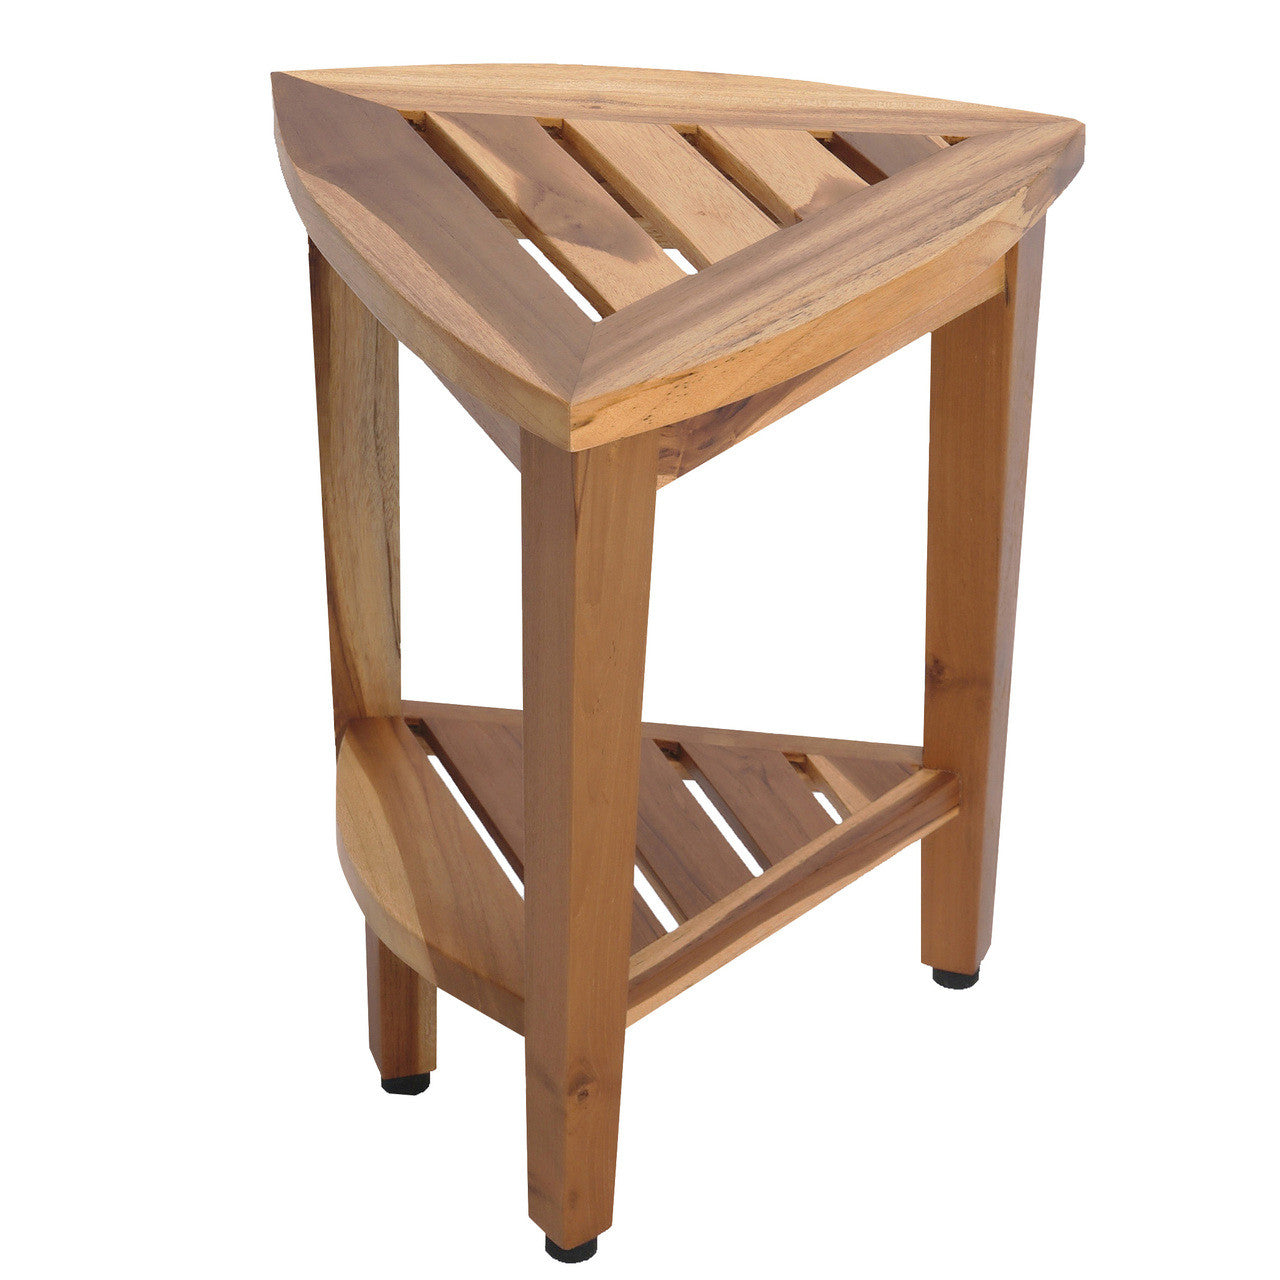 EcoDecors® SnazzyCorner® 18"H Teak Wood Curved Corner Shower Bench with Shelf in EarthyTeak Finish